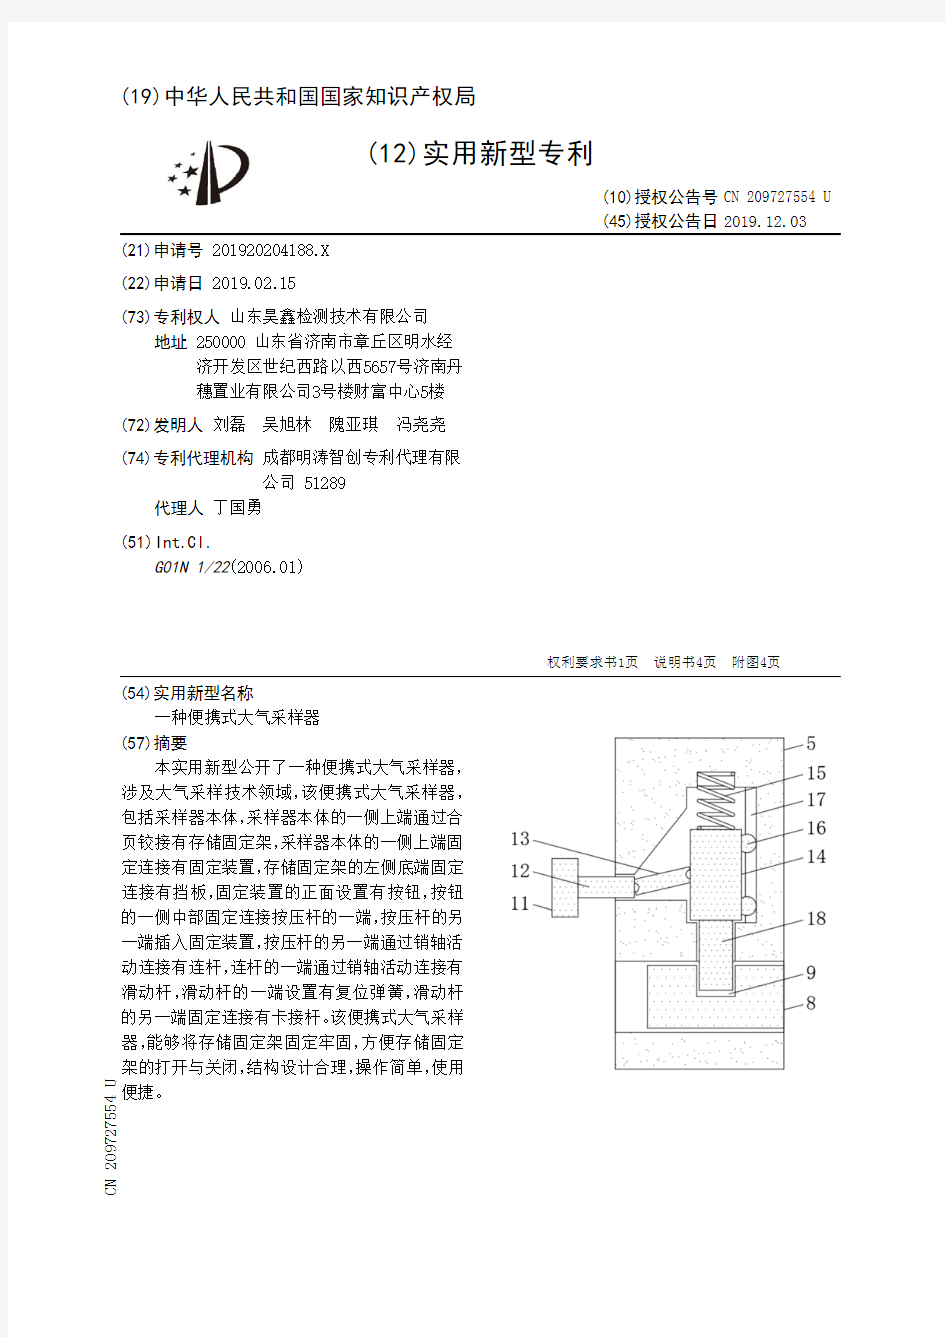 【CN209727554U】一种便携式大气采样器【专利】